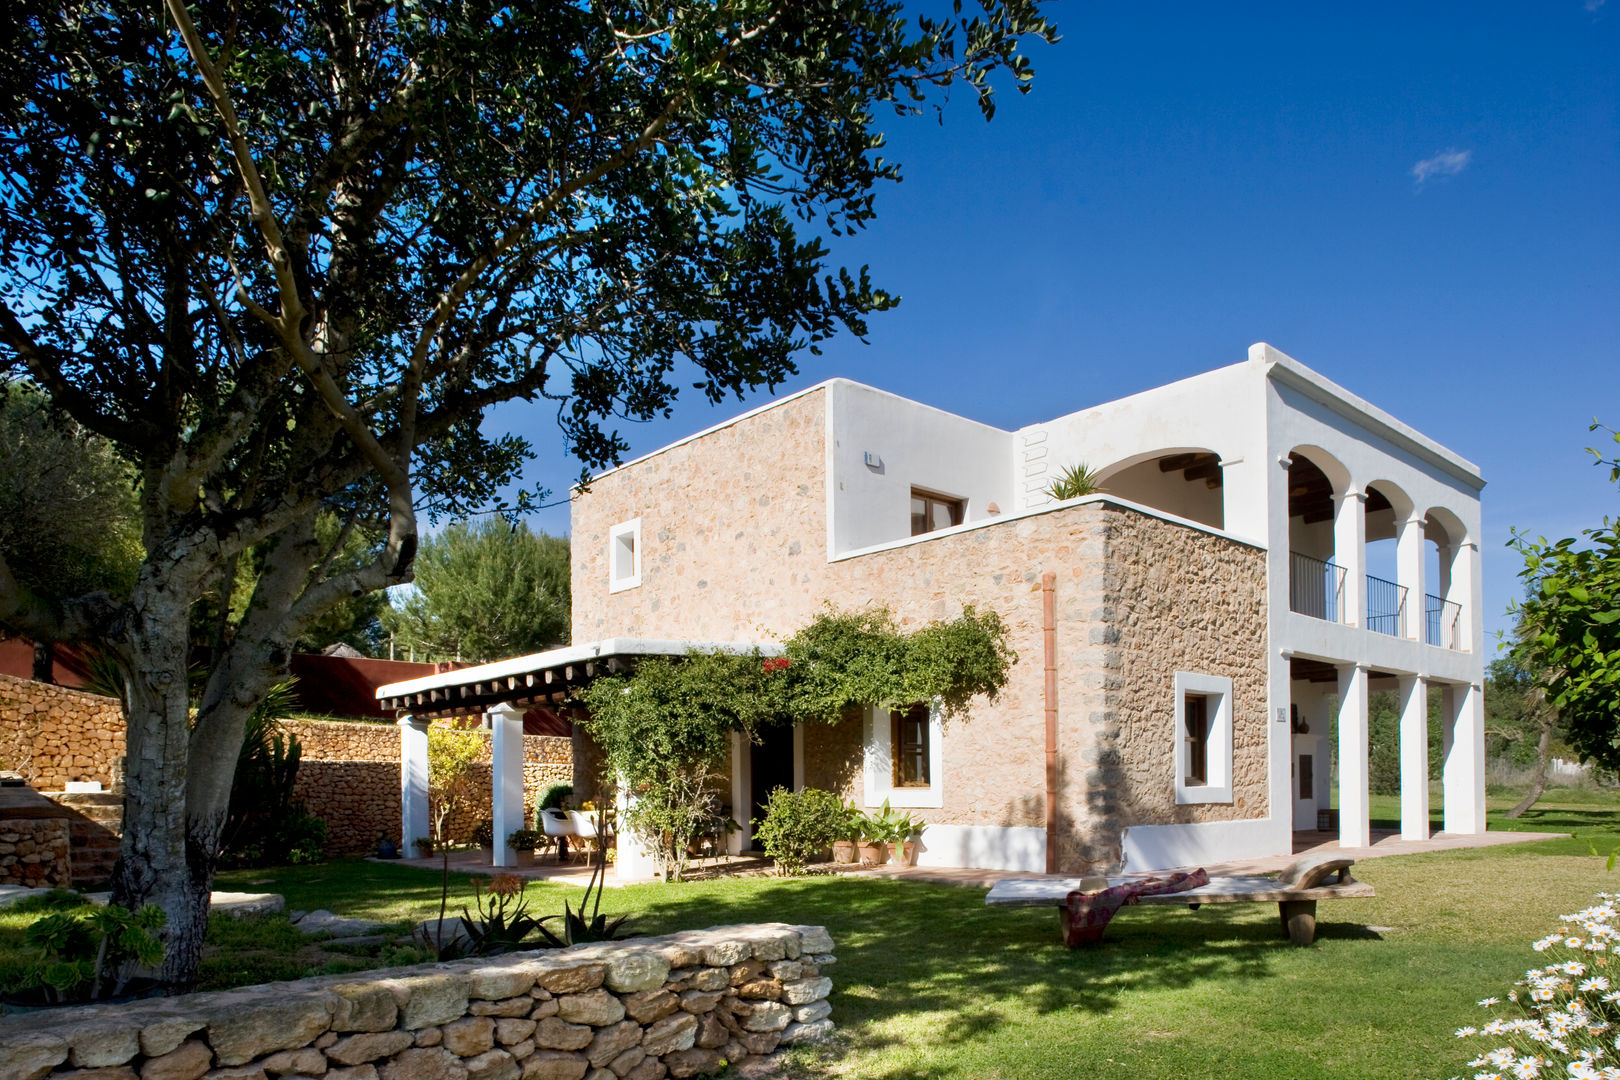 Casa en Ibiza, recdi8 recdi8 Casas de estilo rural